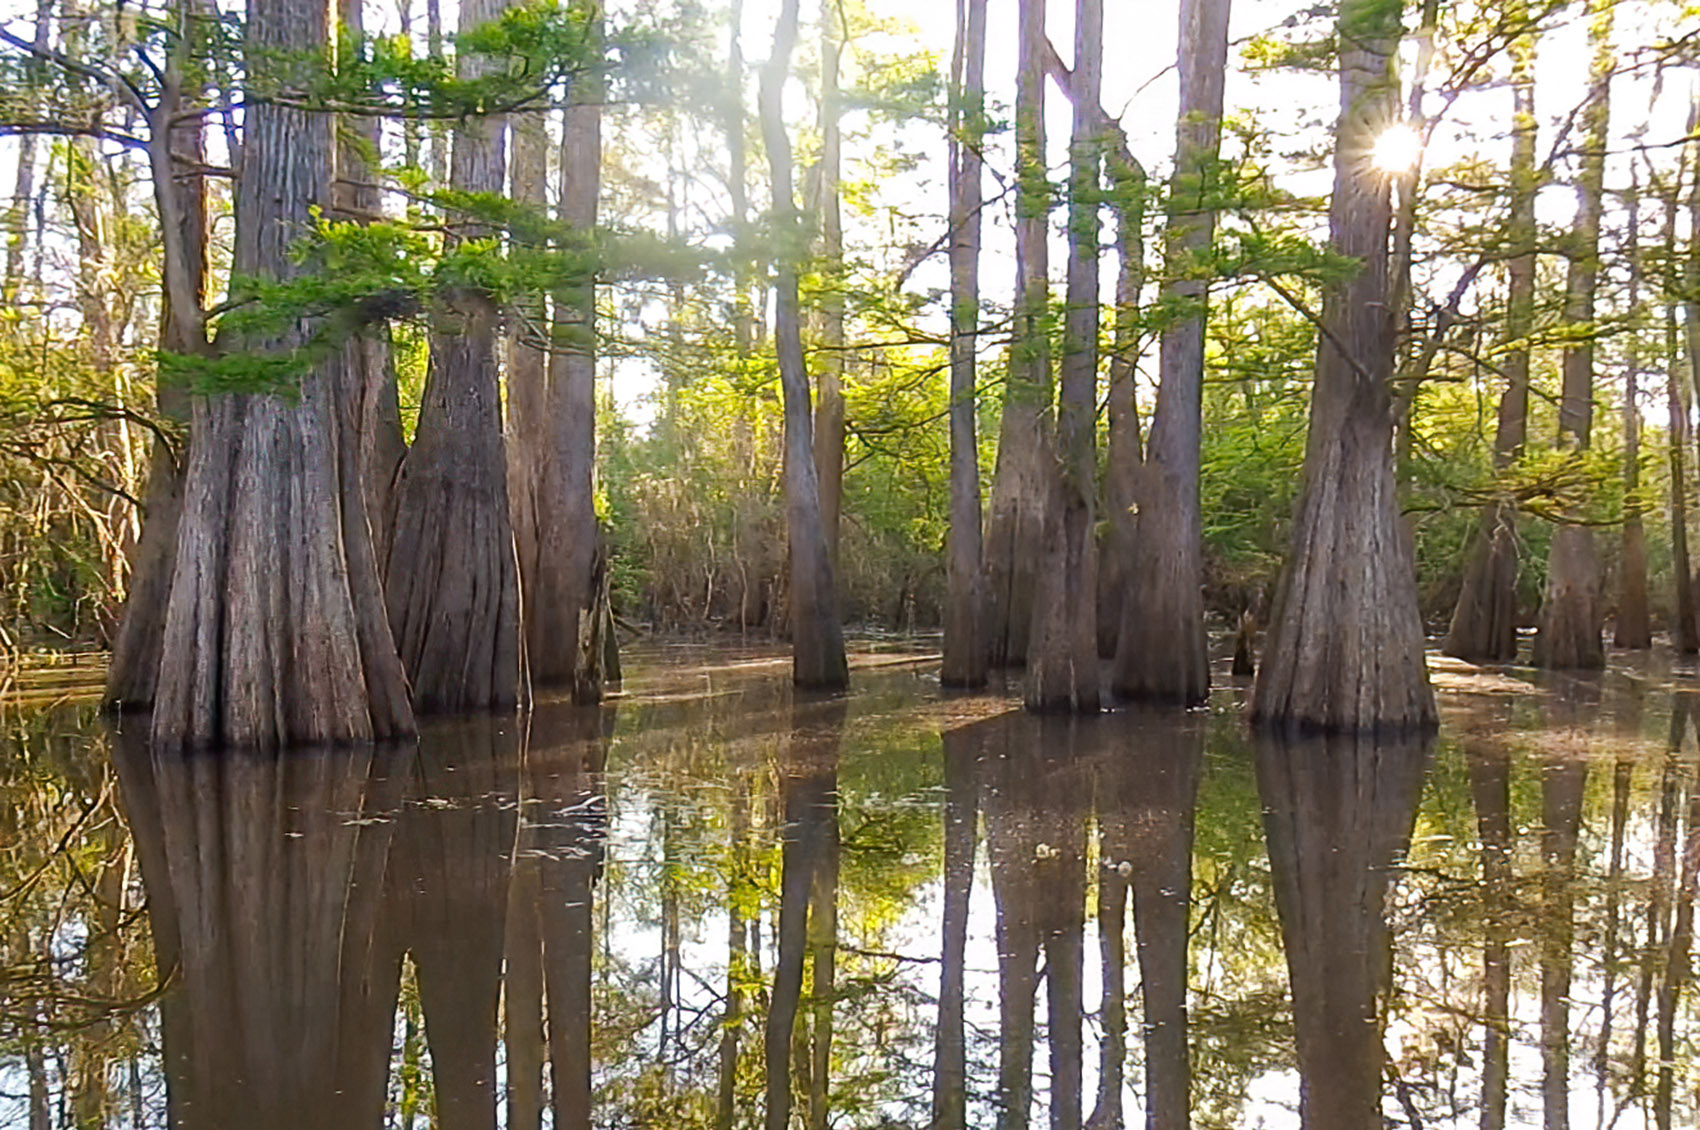 backlit cypress trees reflect in still water of Atchafalaya Basin Swamp in Louisiana